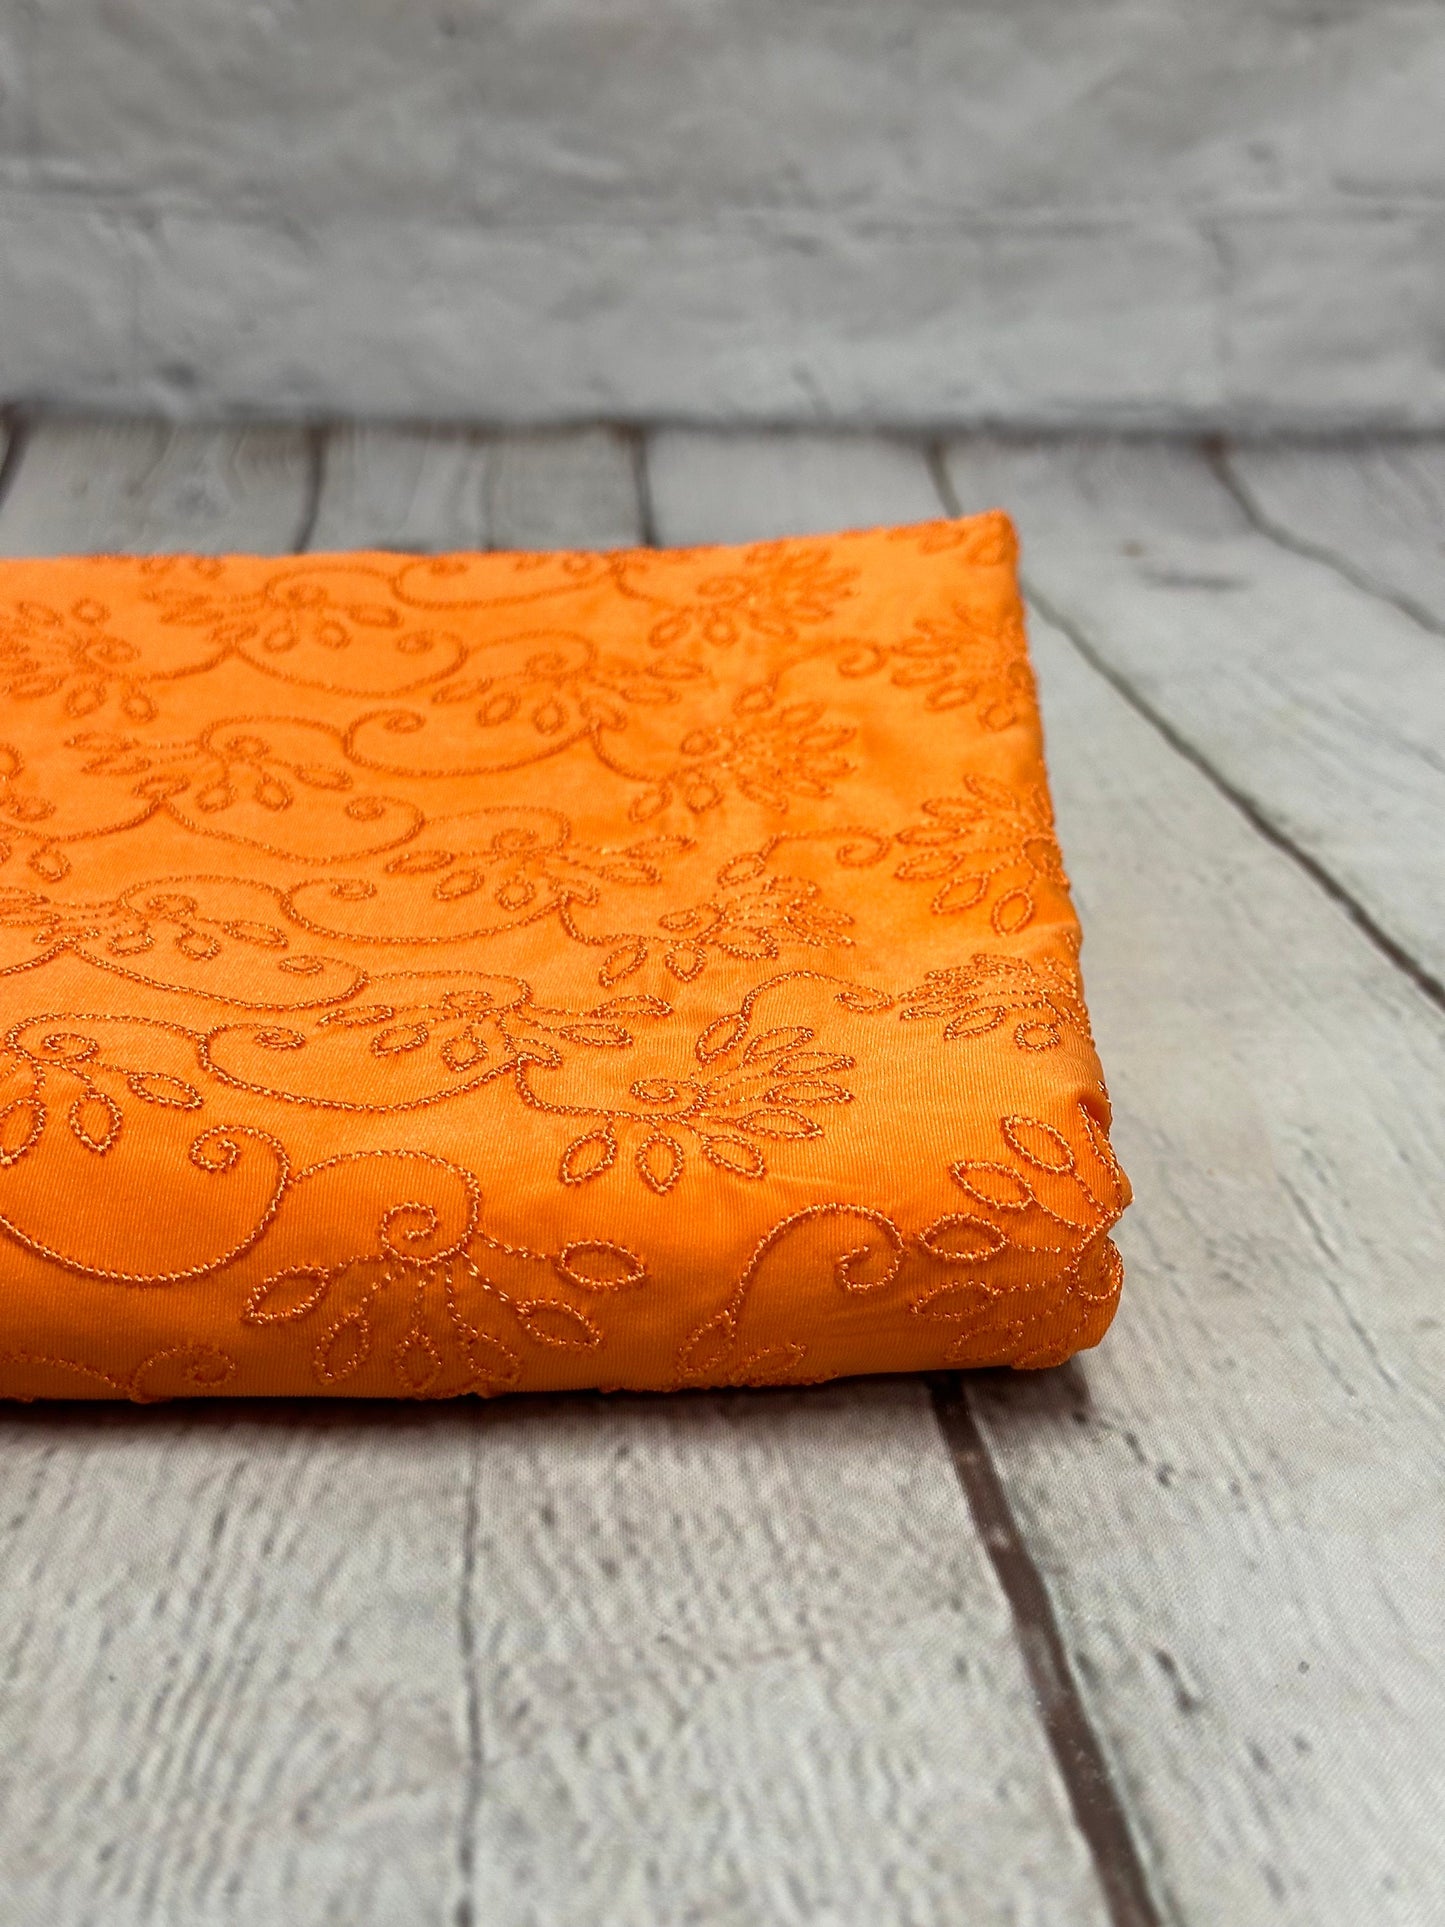 4 Way Stretch Print Nylon Spandex Fabric By The Yard Tricot Swim Wear Bikini Active Wear Embroidered Texture Eyelet Orange